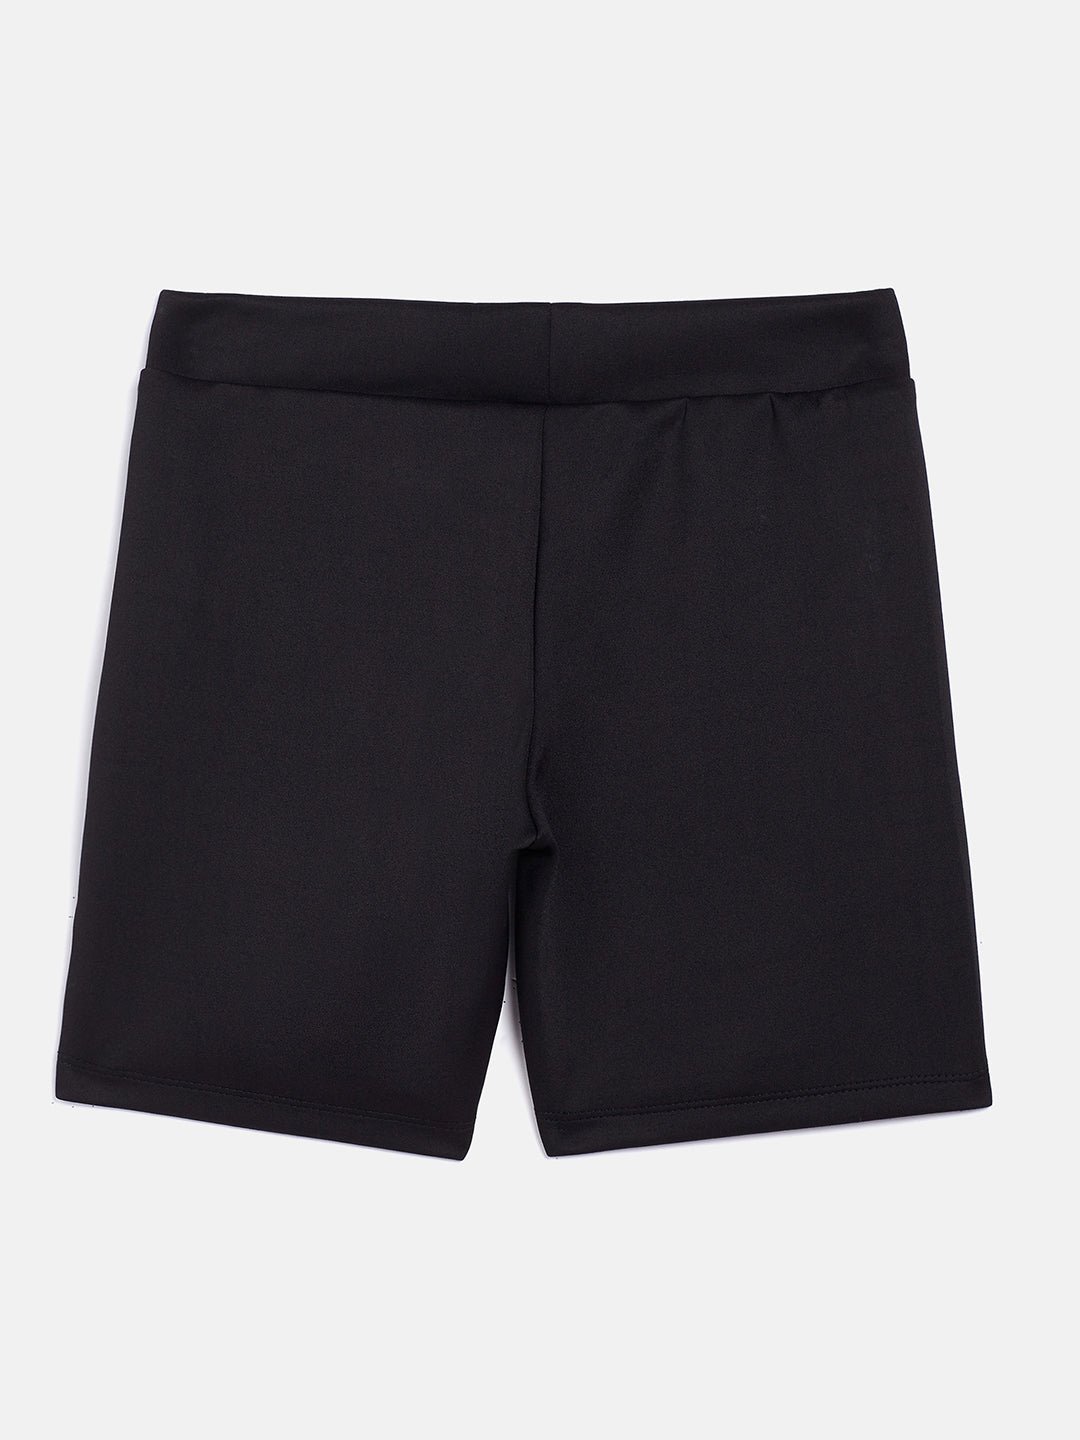 Black Active Shorts - Girls Shorts